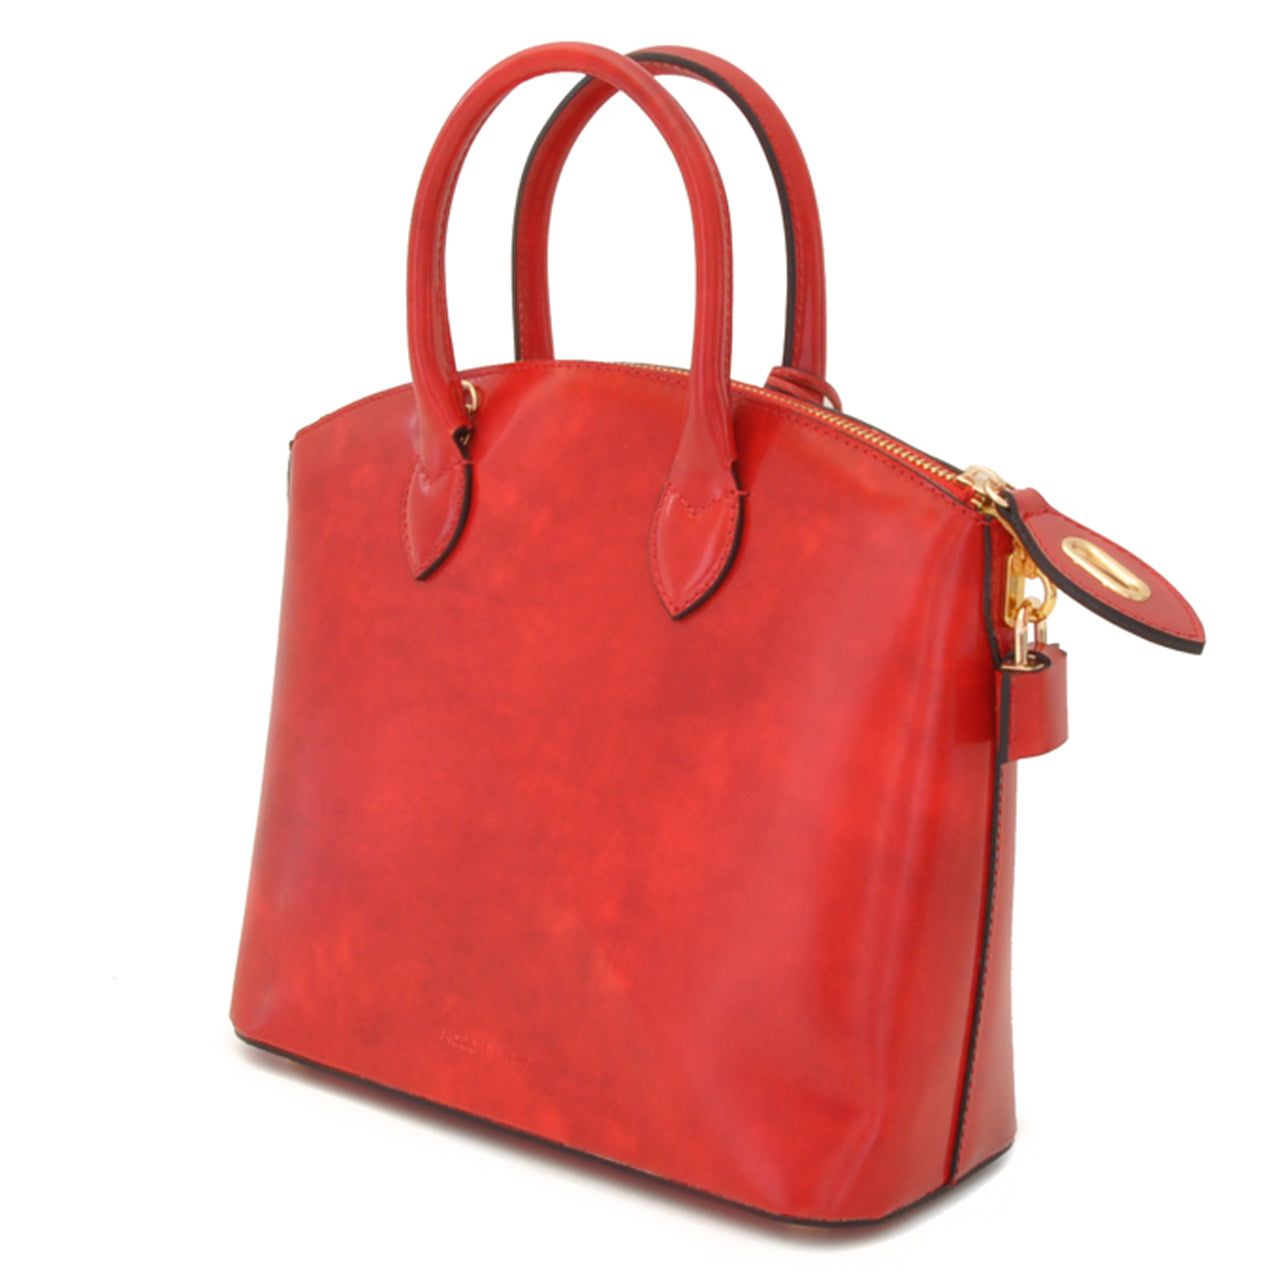 Pratesi Versilia Small Handbag in genuine Italian leather